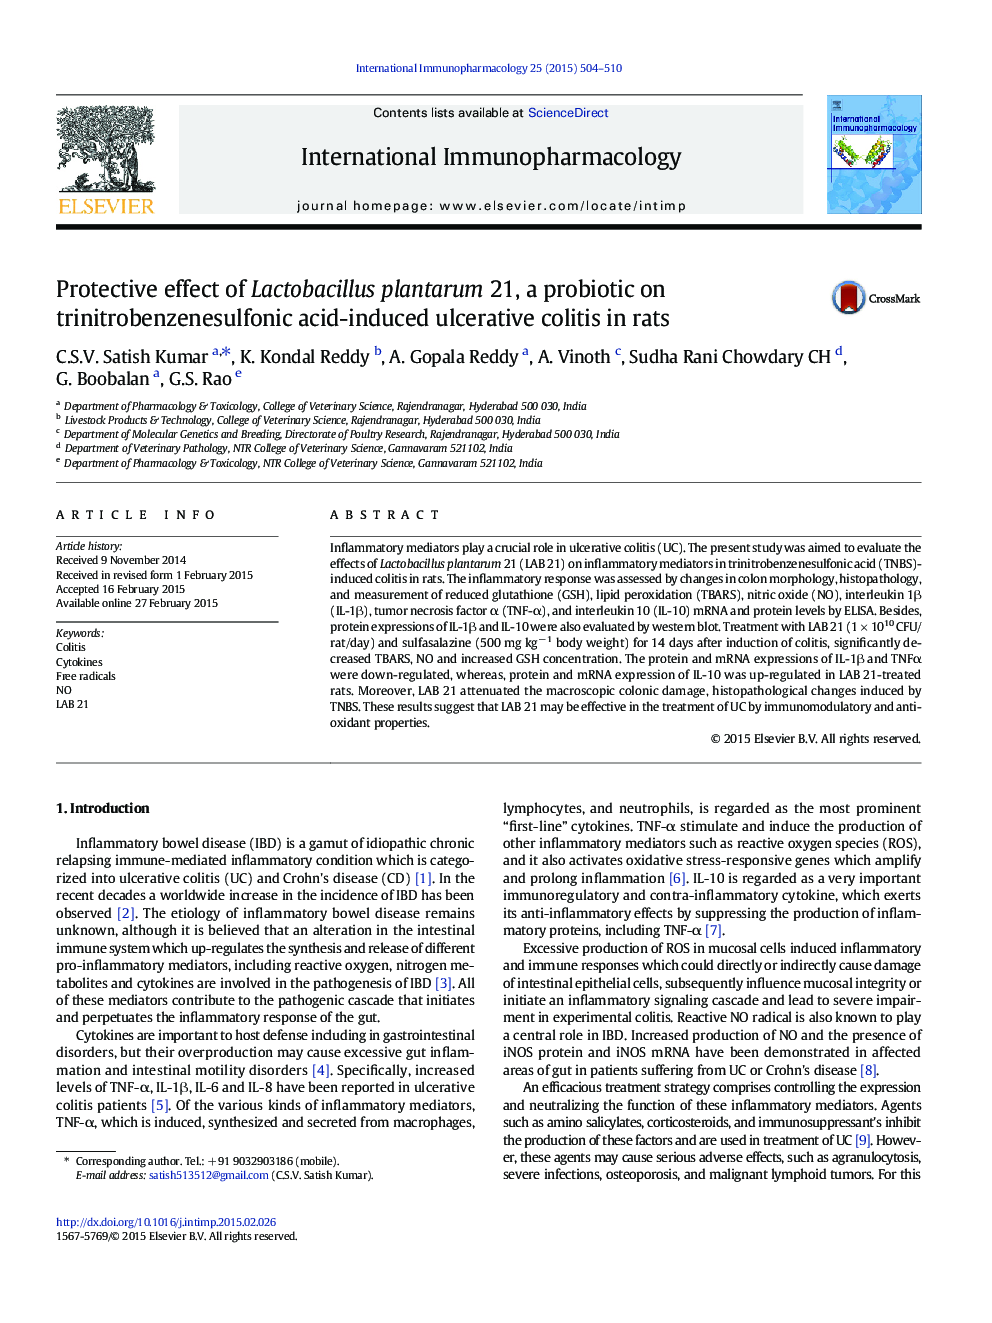 Protective effect of Lactobacillus plantarum 21, a probiotic on trinitrobenzenesulfonic acid-induced ulcerative colitis in rats